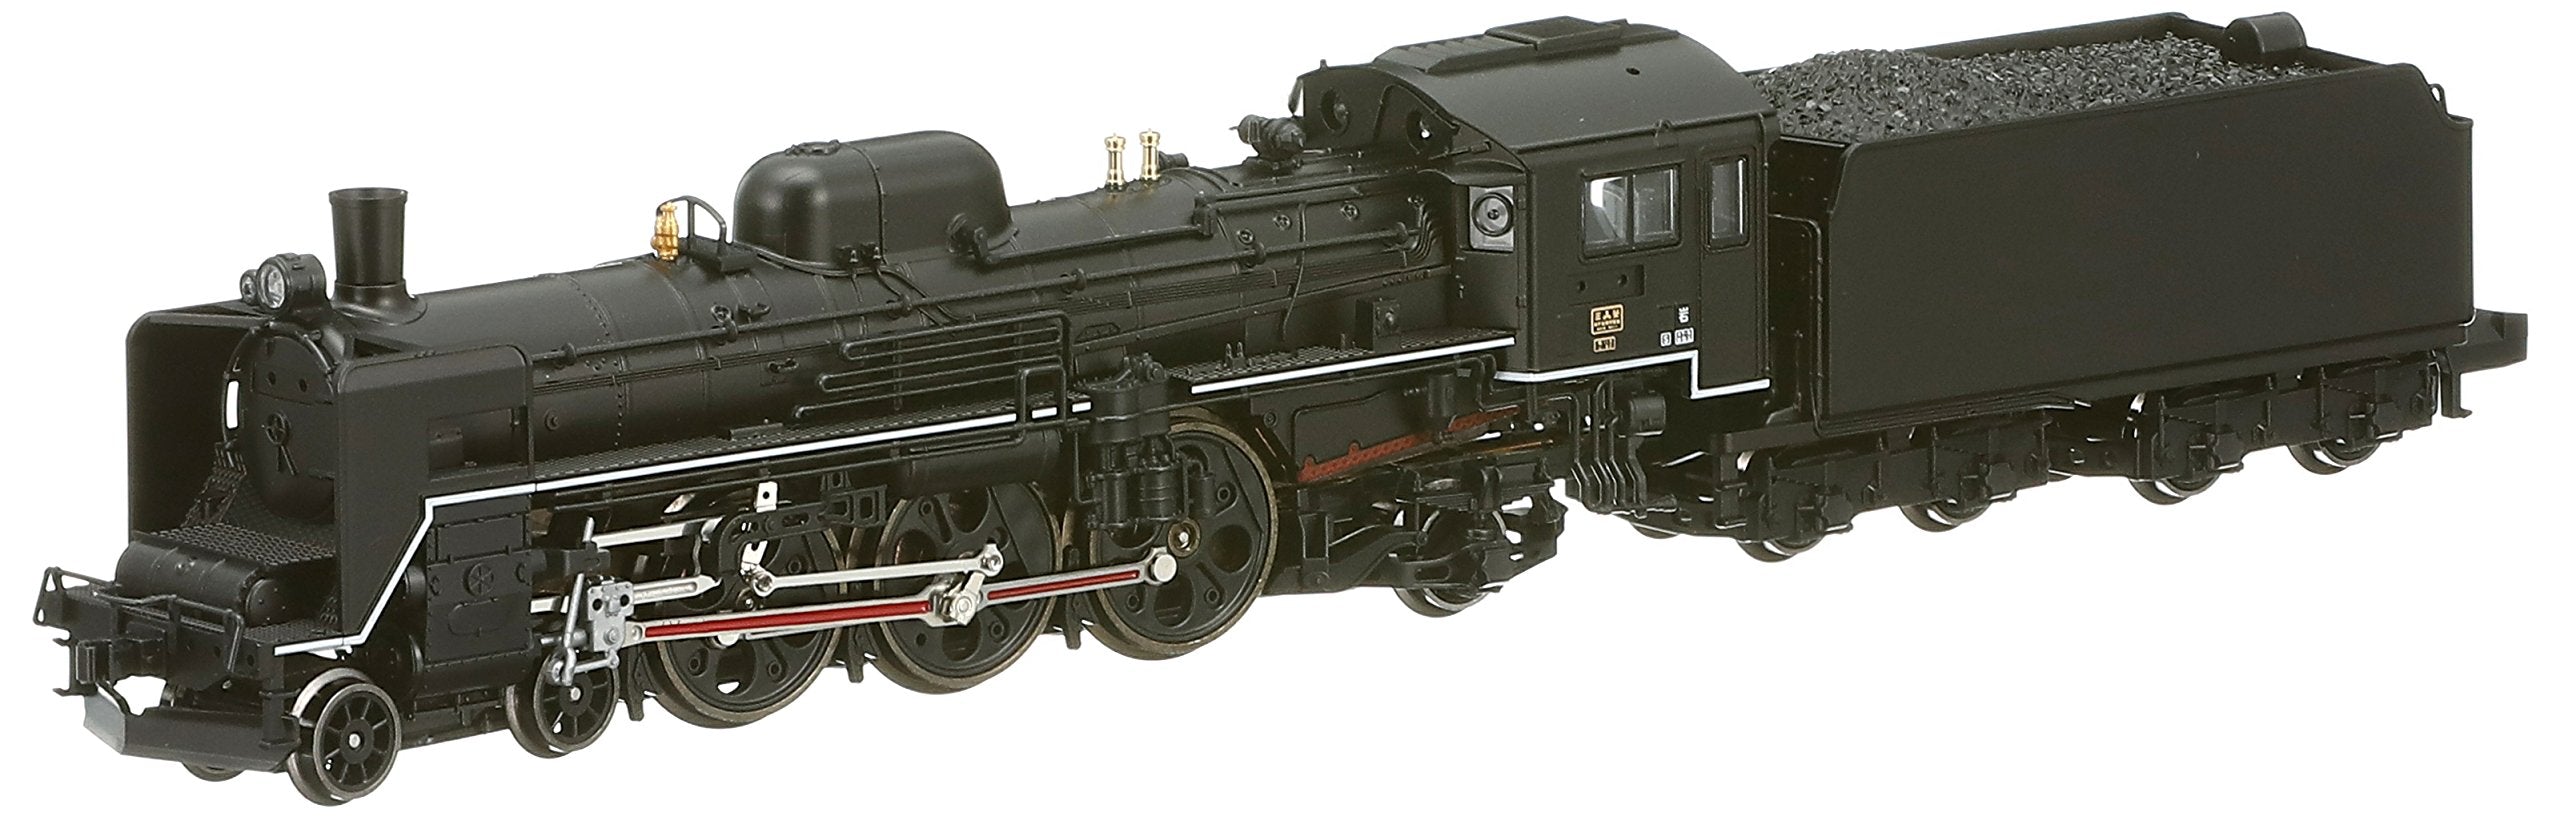 Tomytec Tomix N Gauge C57 Type 135 Steam Locomotive Railway Model 2003